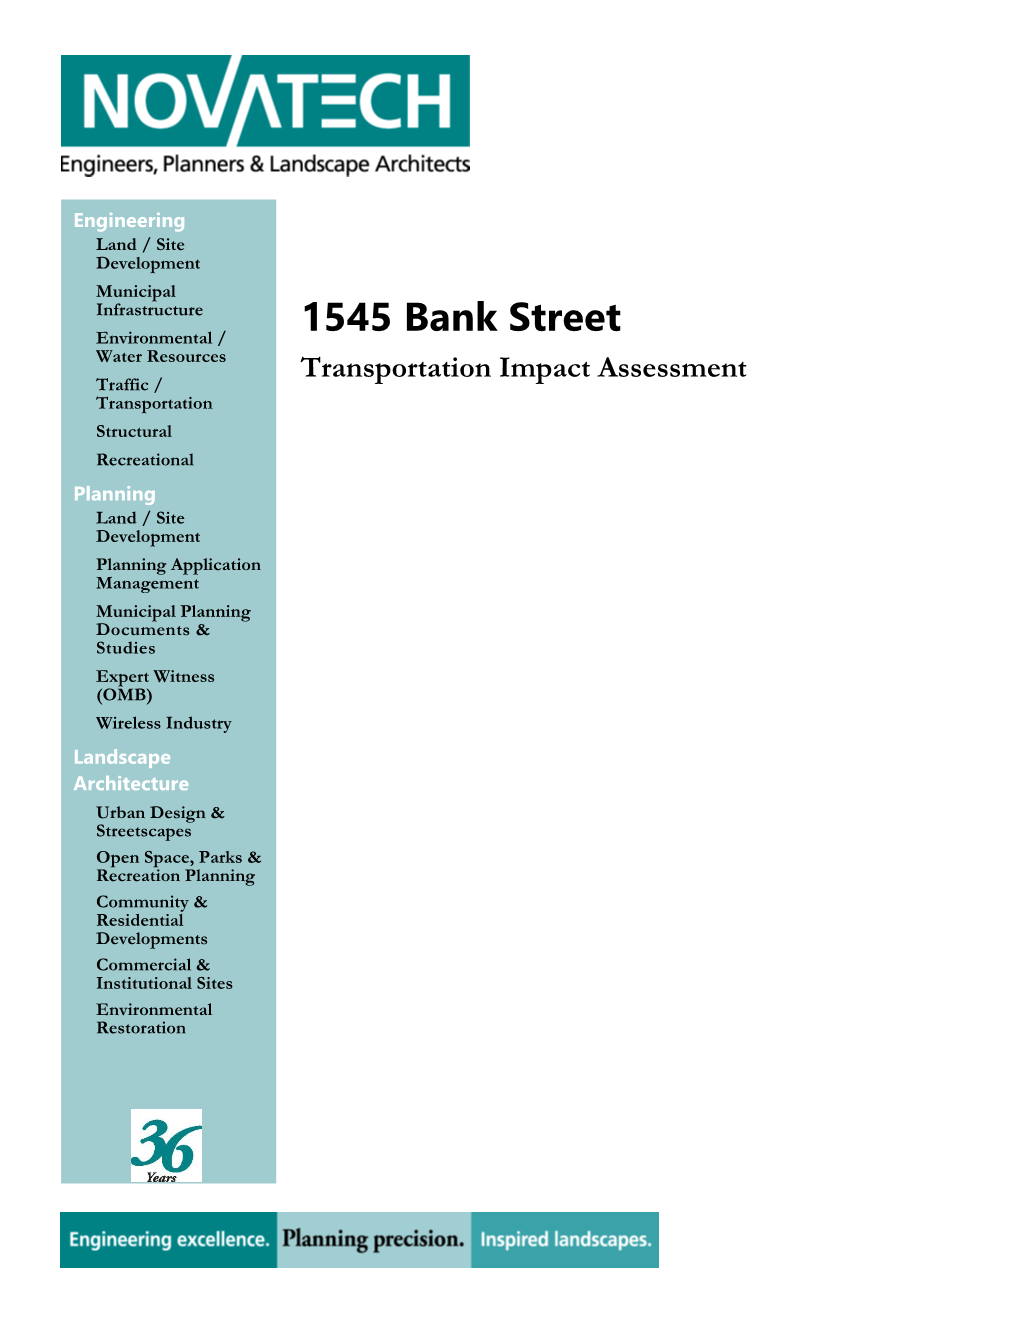 1545 Bank Street Environmental / Water Resources Transportation Impact Assessment Traffic / Transportation